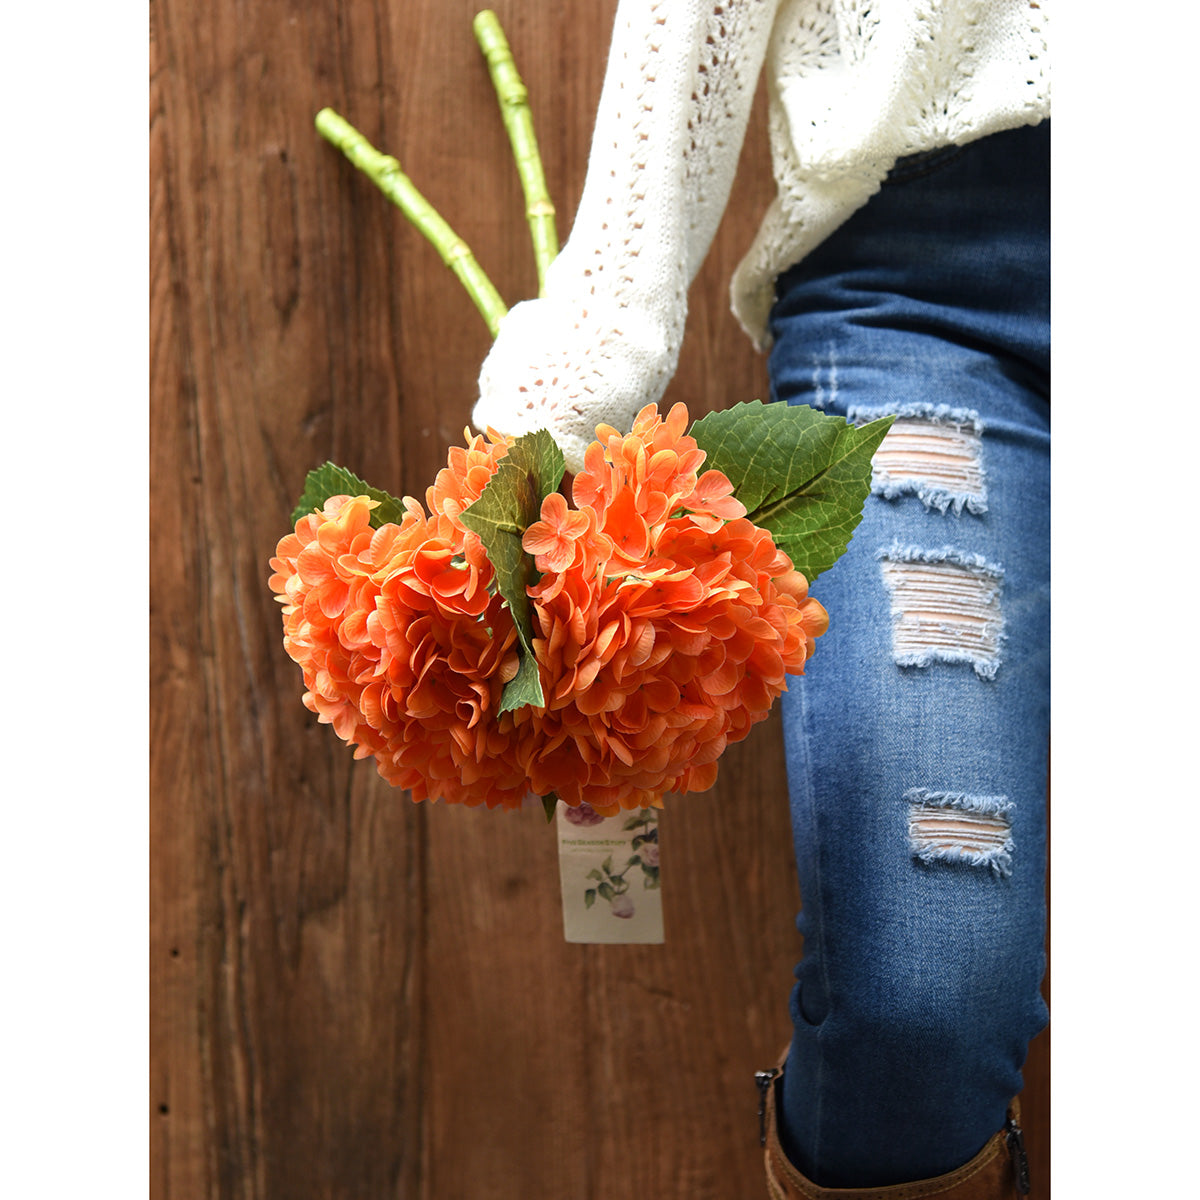 FiveSeasonStuff 2 Stems Real Touch Petals and Leaves Artificial Hydrangea Flowers Long Stem Floral Arrangement | for Wedding Bridal Party Home Décor DIY Floral Decoration (Orange)